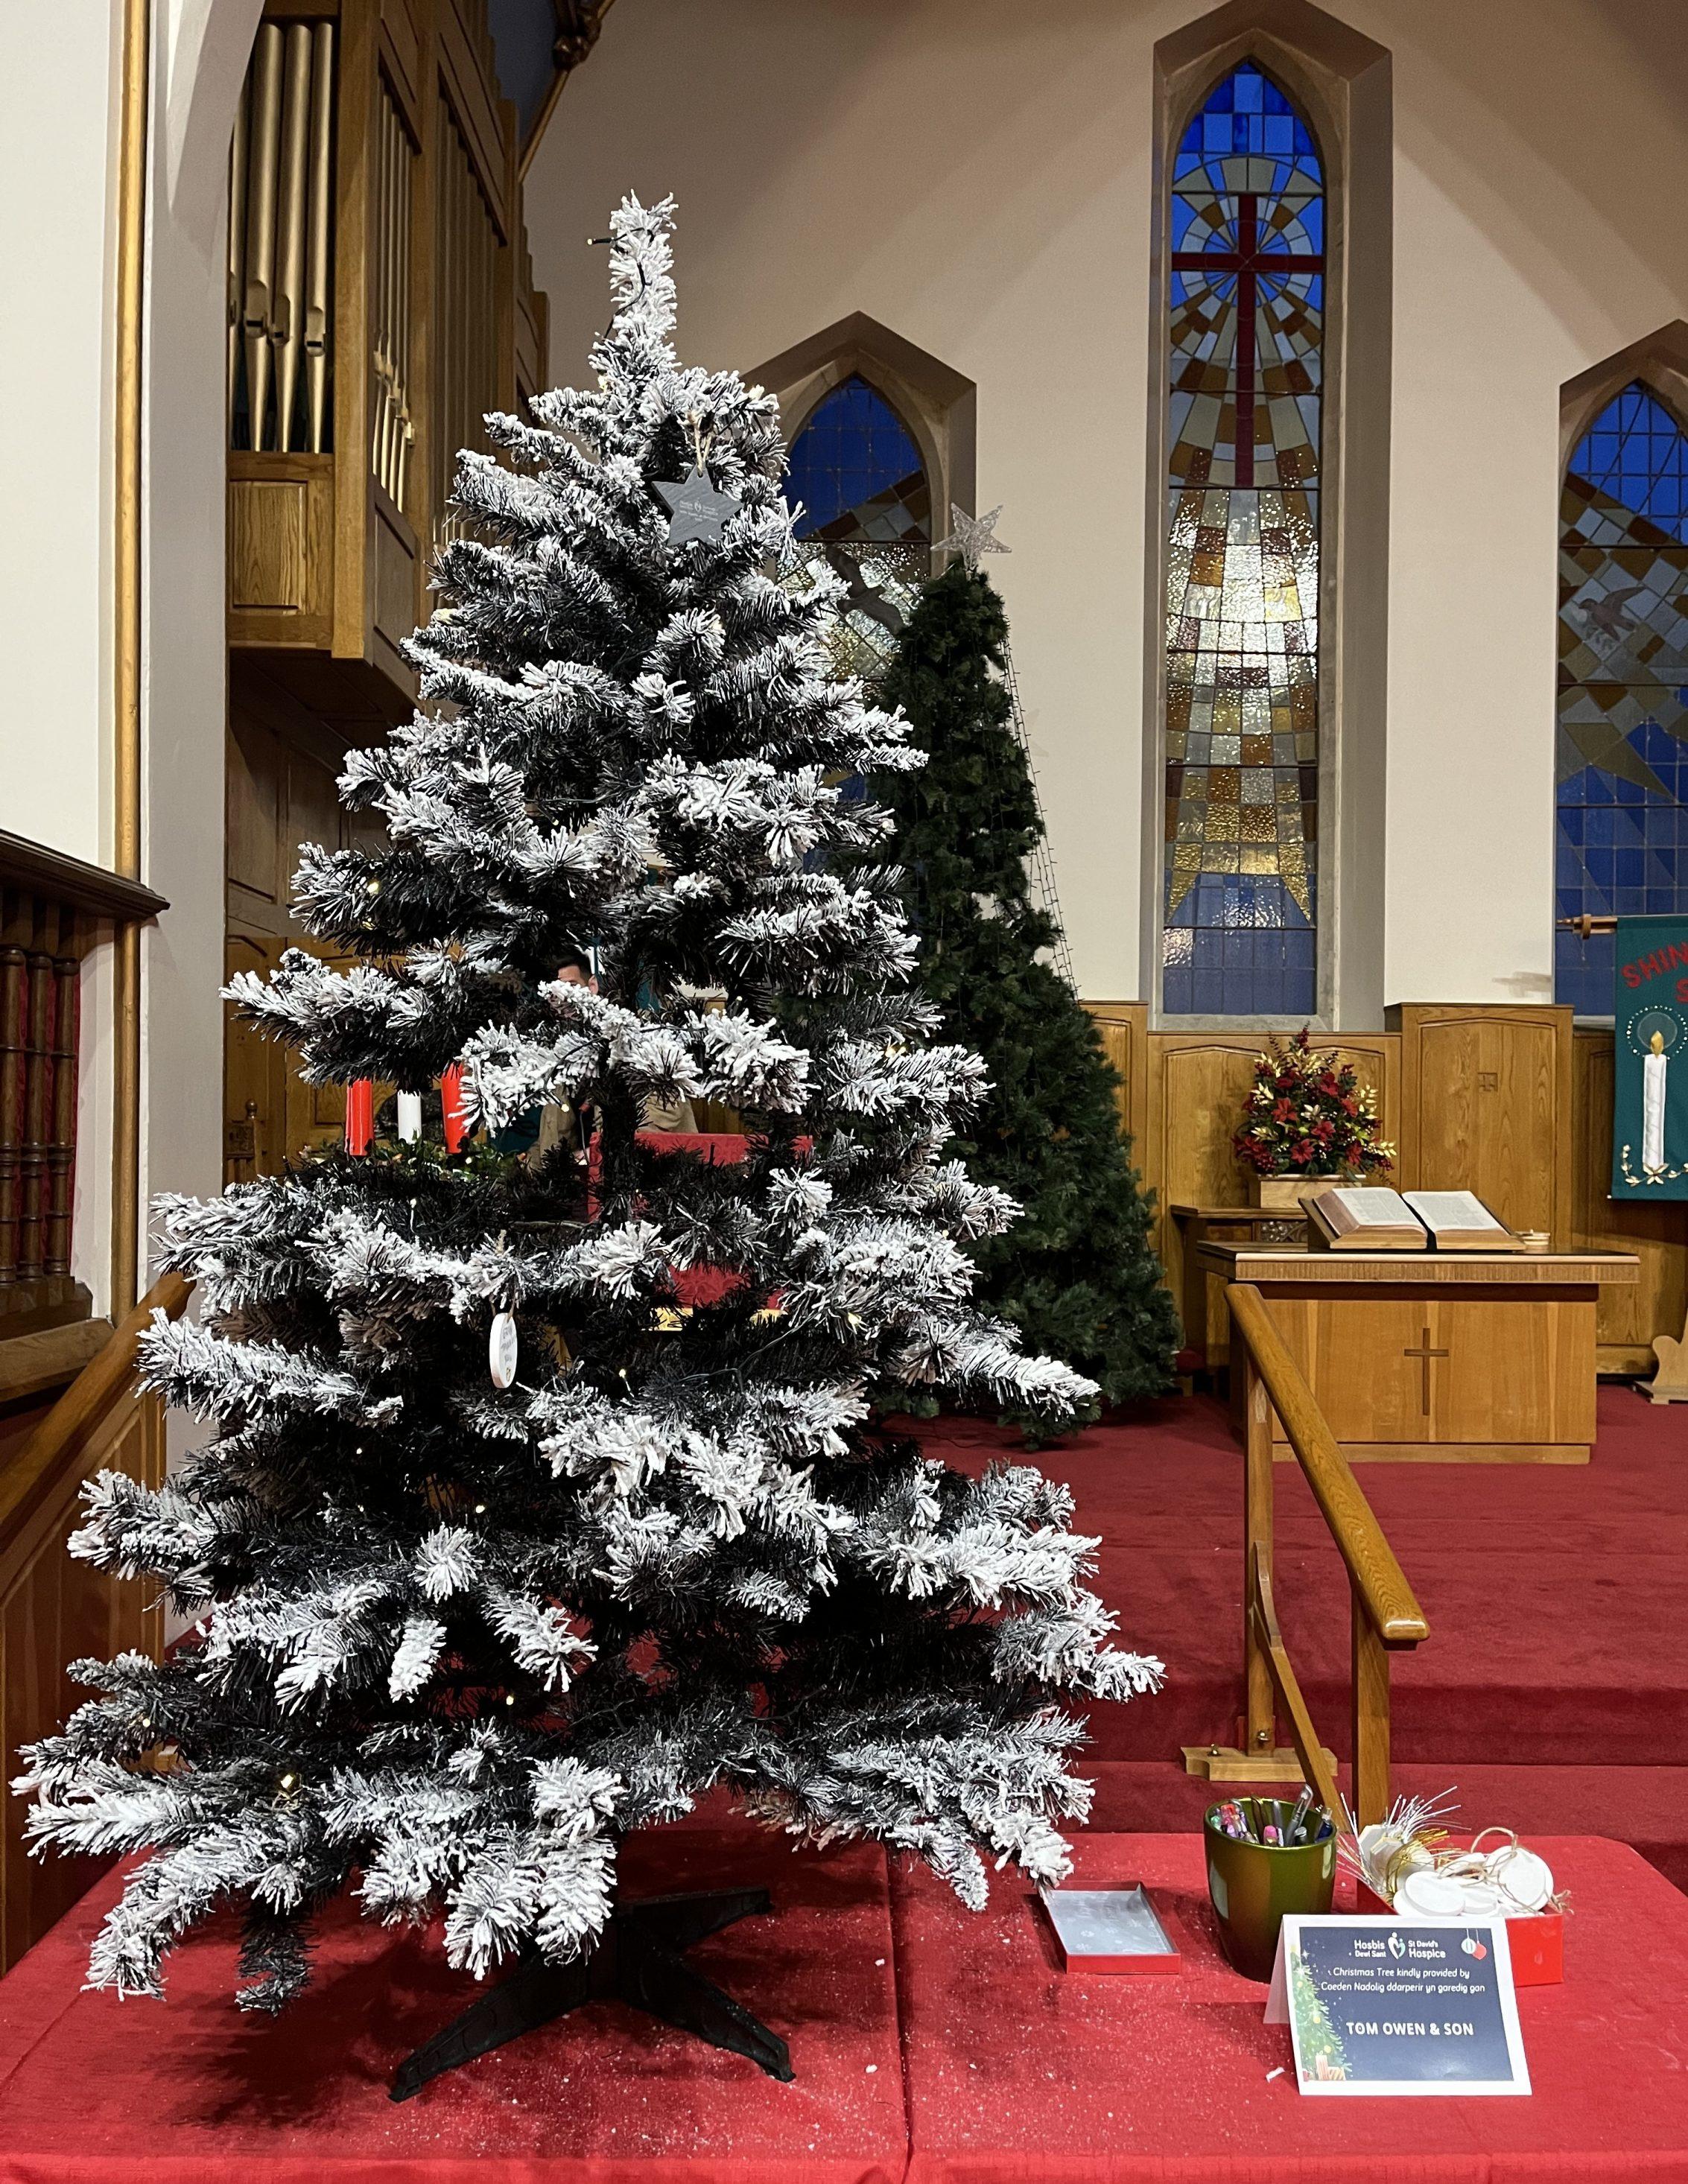 Christmas Tree Festival at St John's Methodist Church in Llandudno